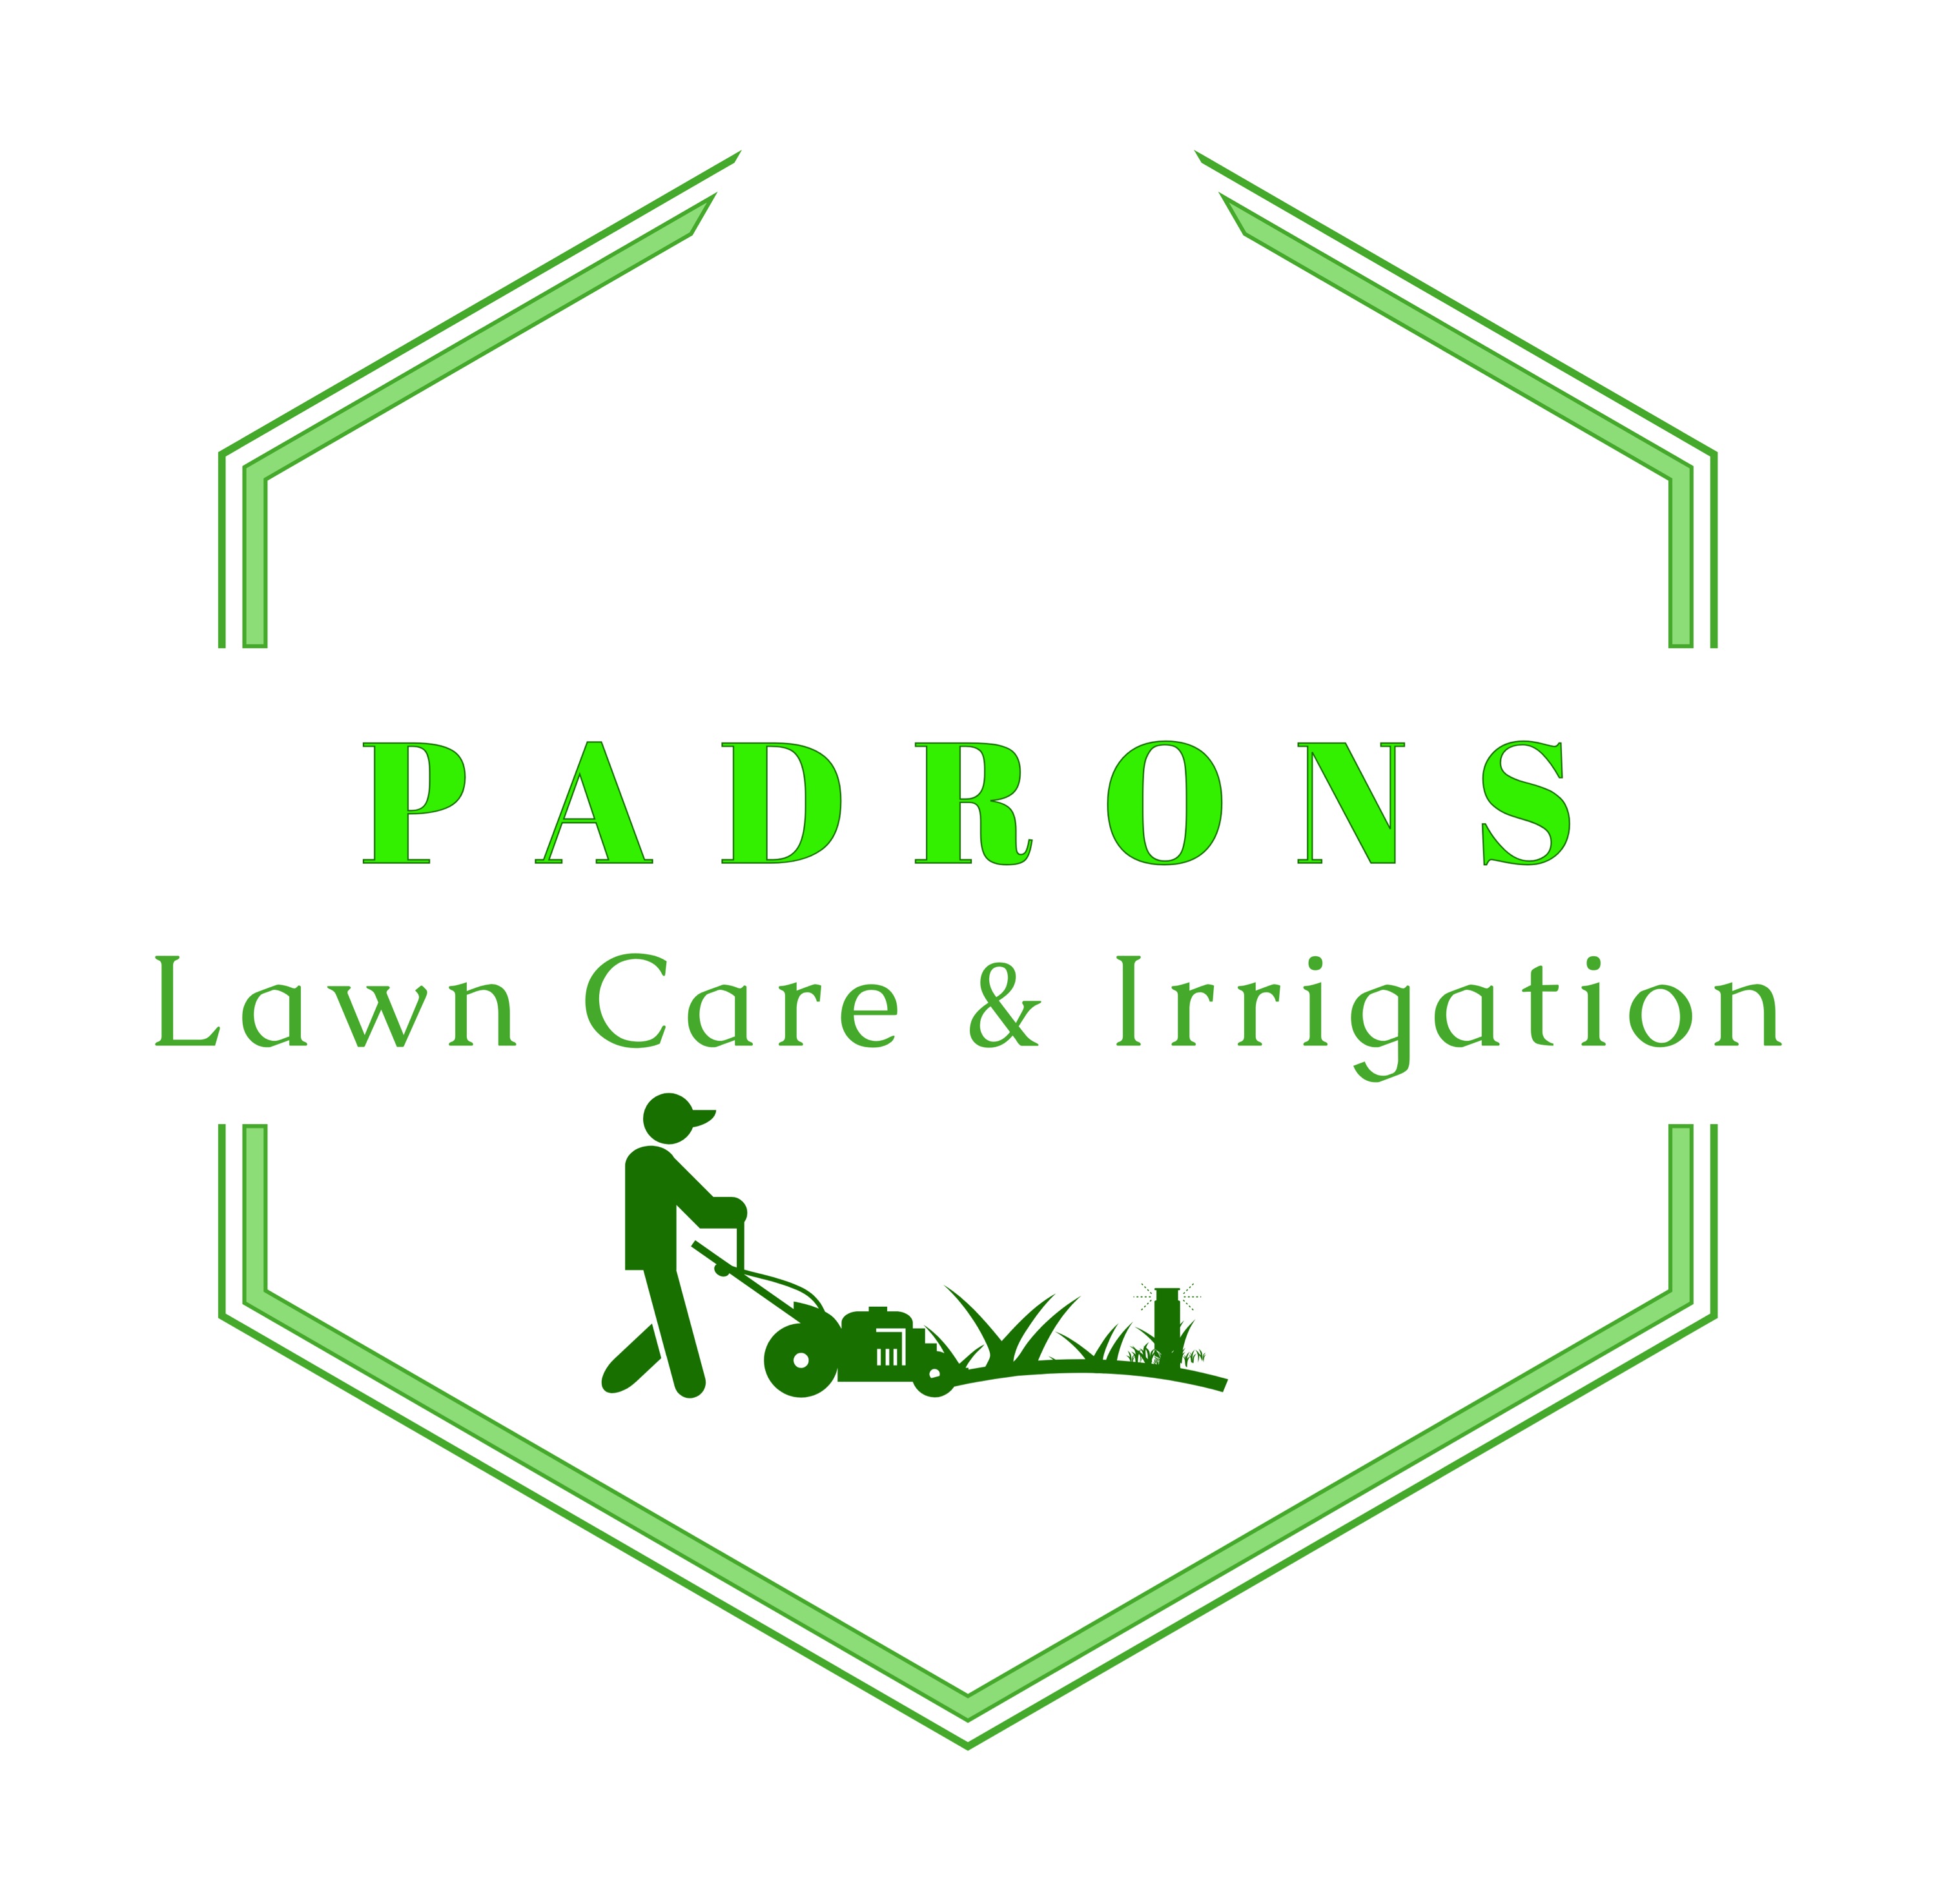 Padrons Outdoor Improvement LLC Logo